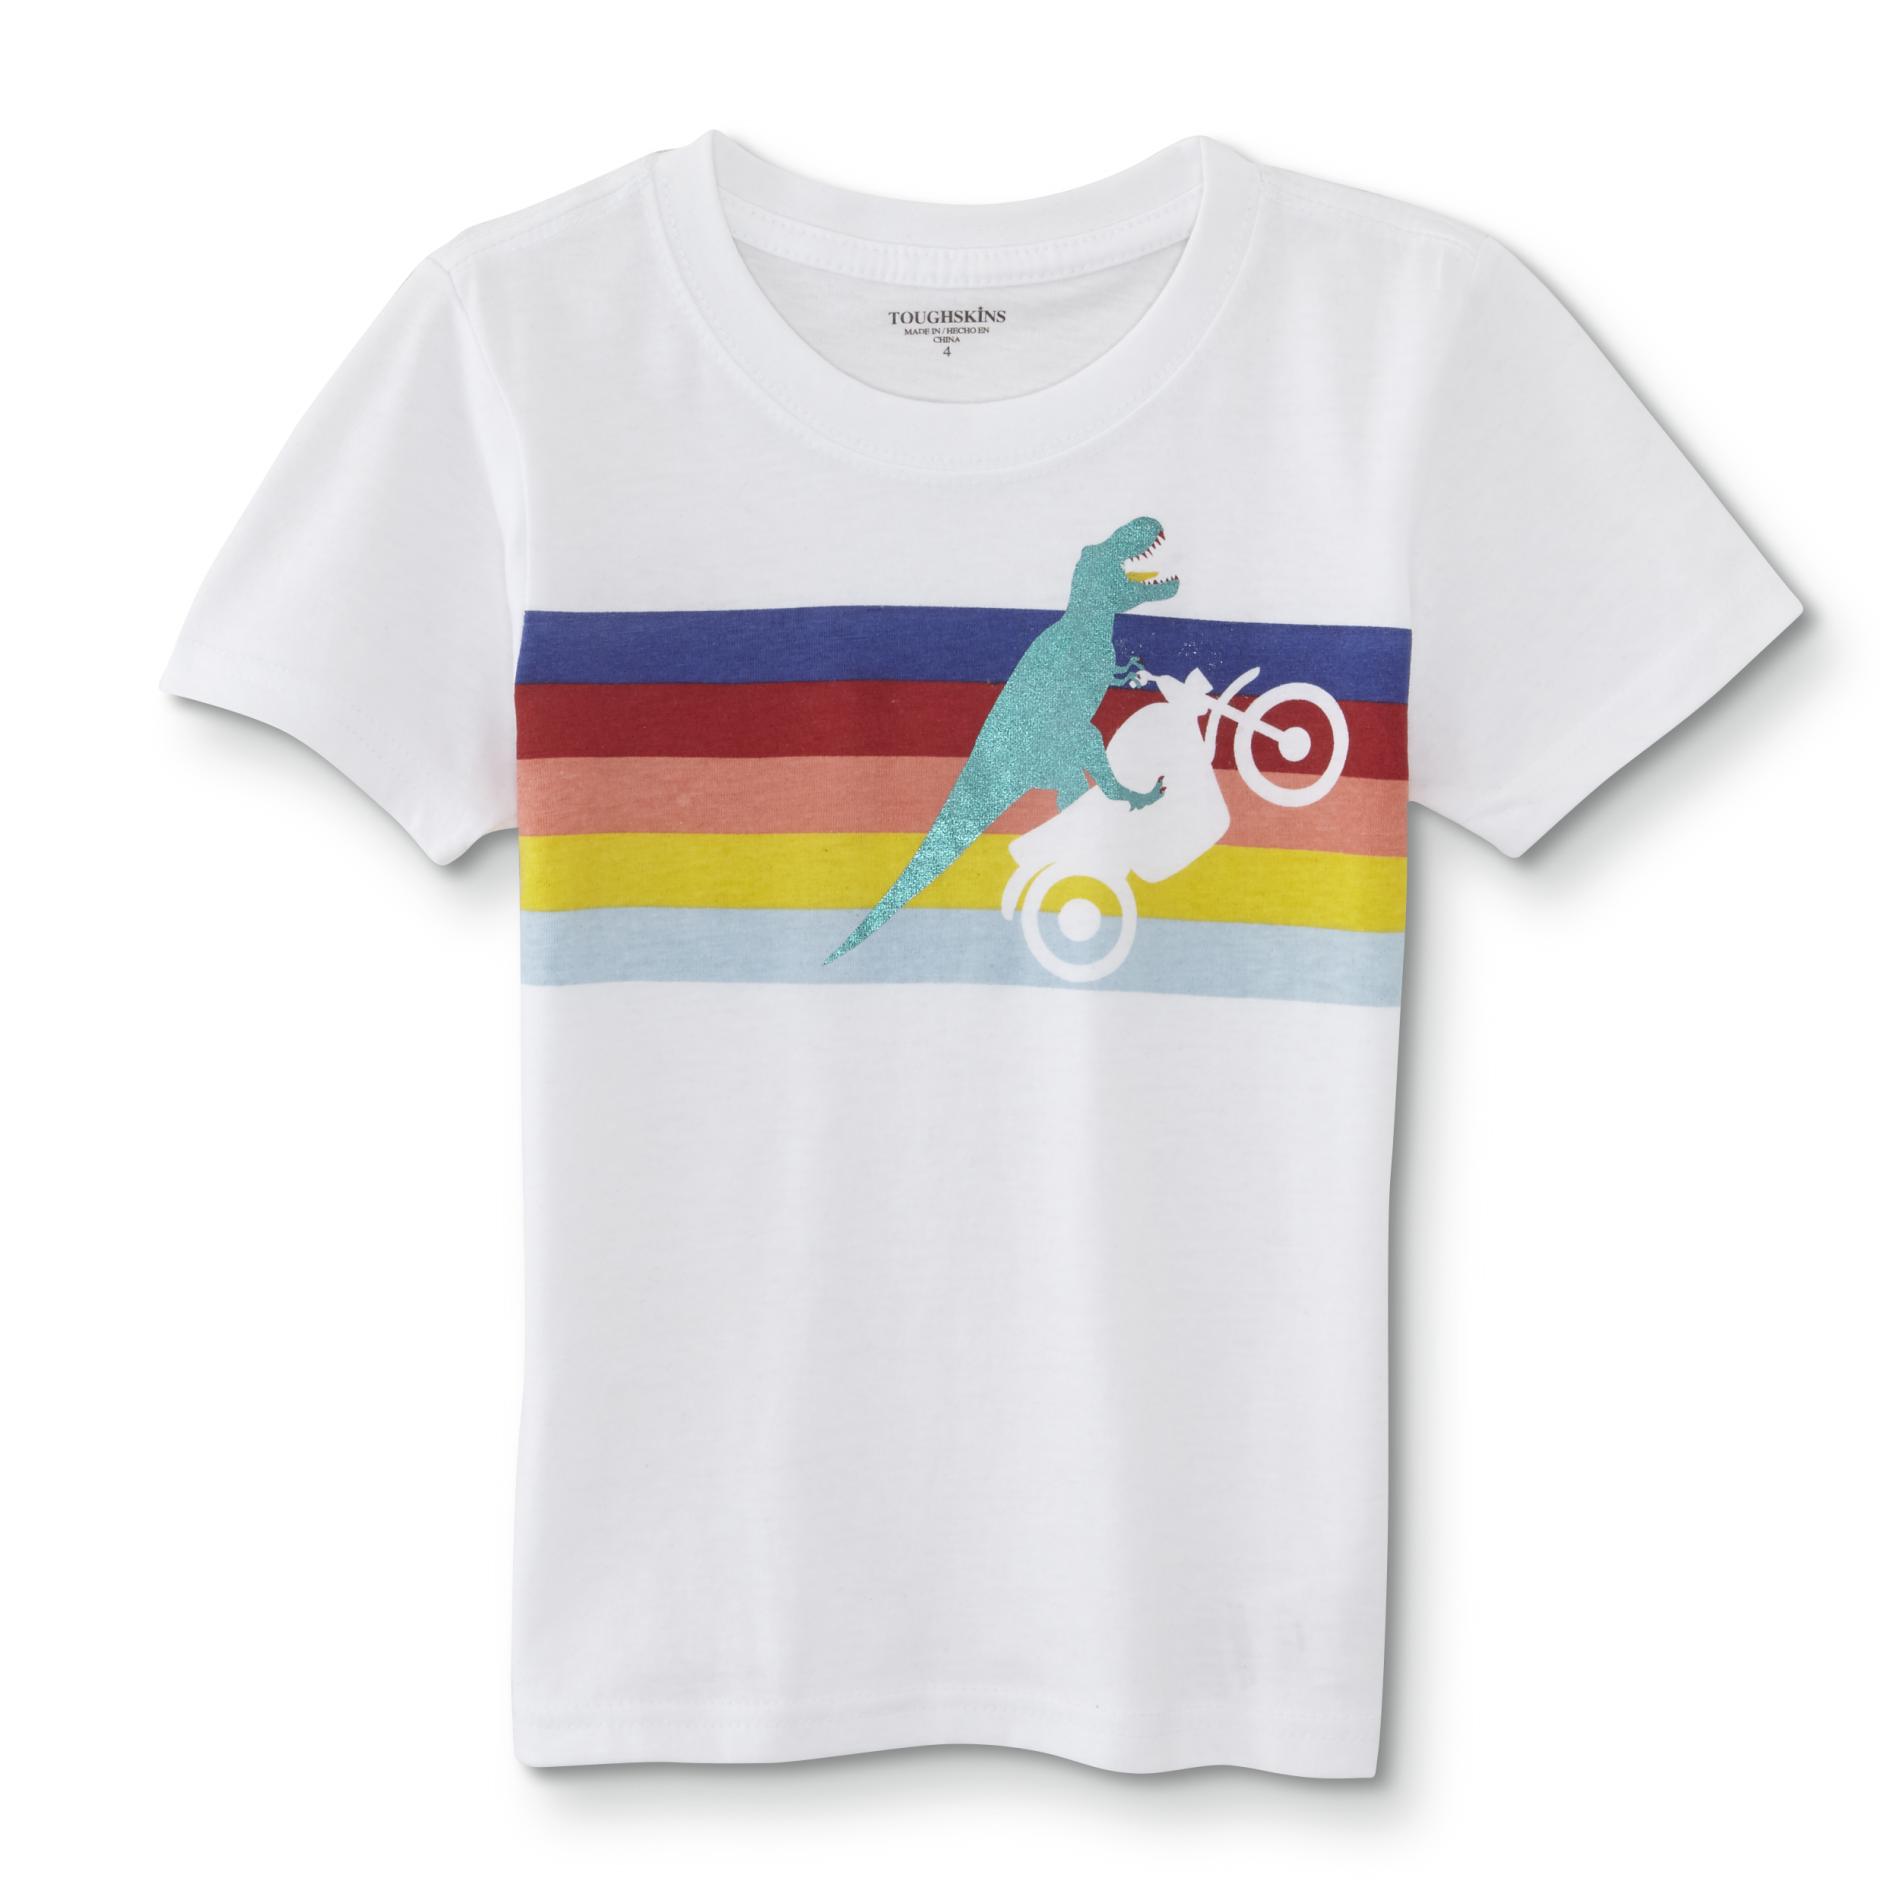 Toughskins Boys' Graphic T-Shirt - Dinosaur/Motorcycle